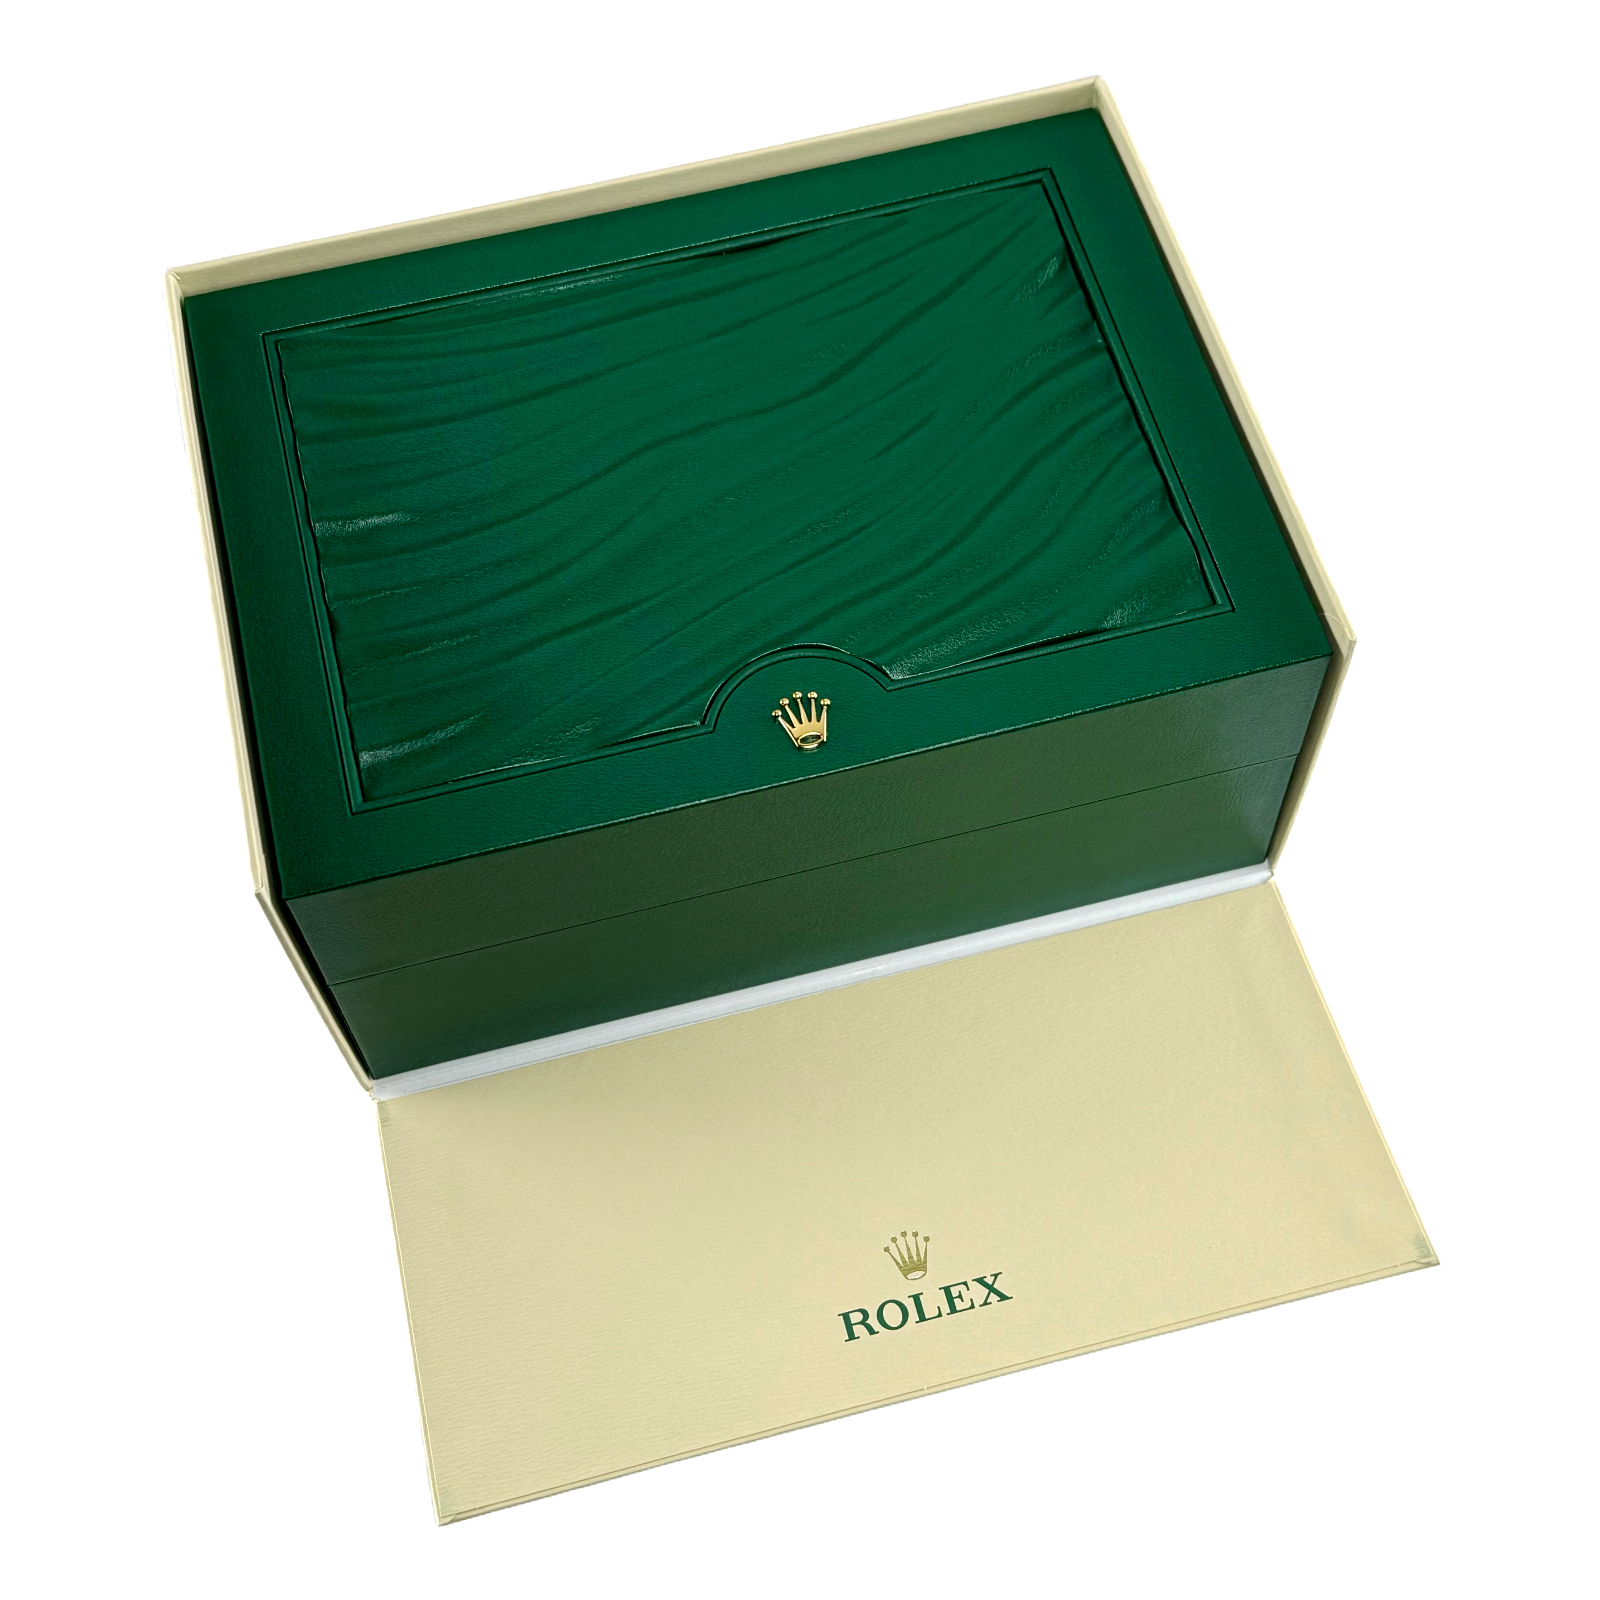 Rolex Oyster Box Größe Size L Uhrenbox Karton watch-box Grün Green 39141.01